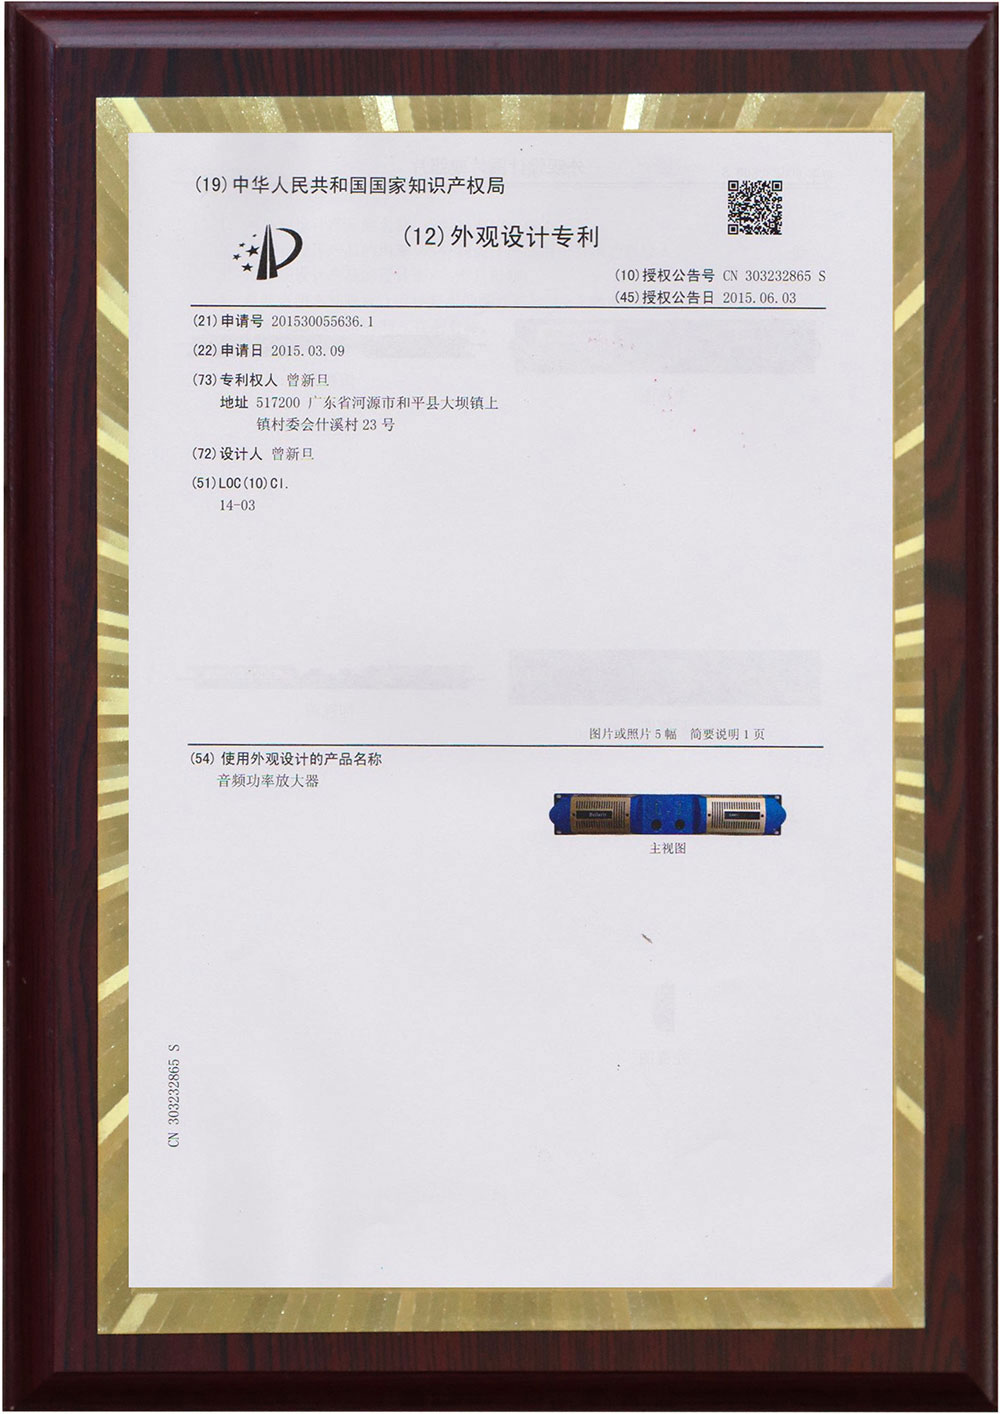 Power amplifier appearance patent certificate